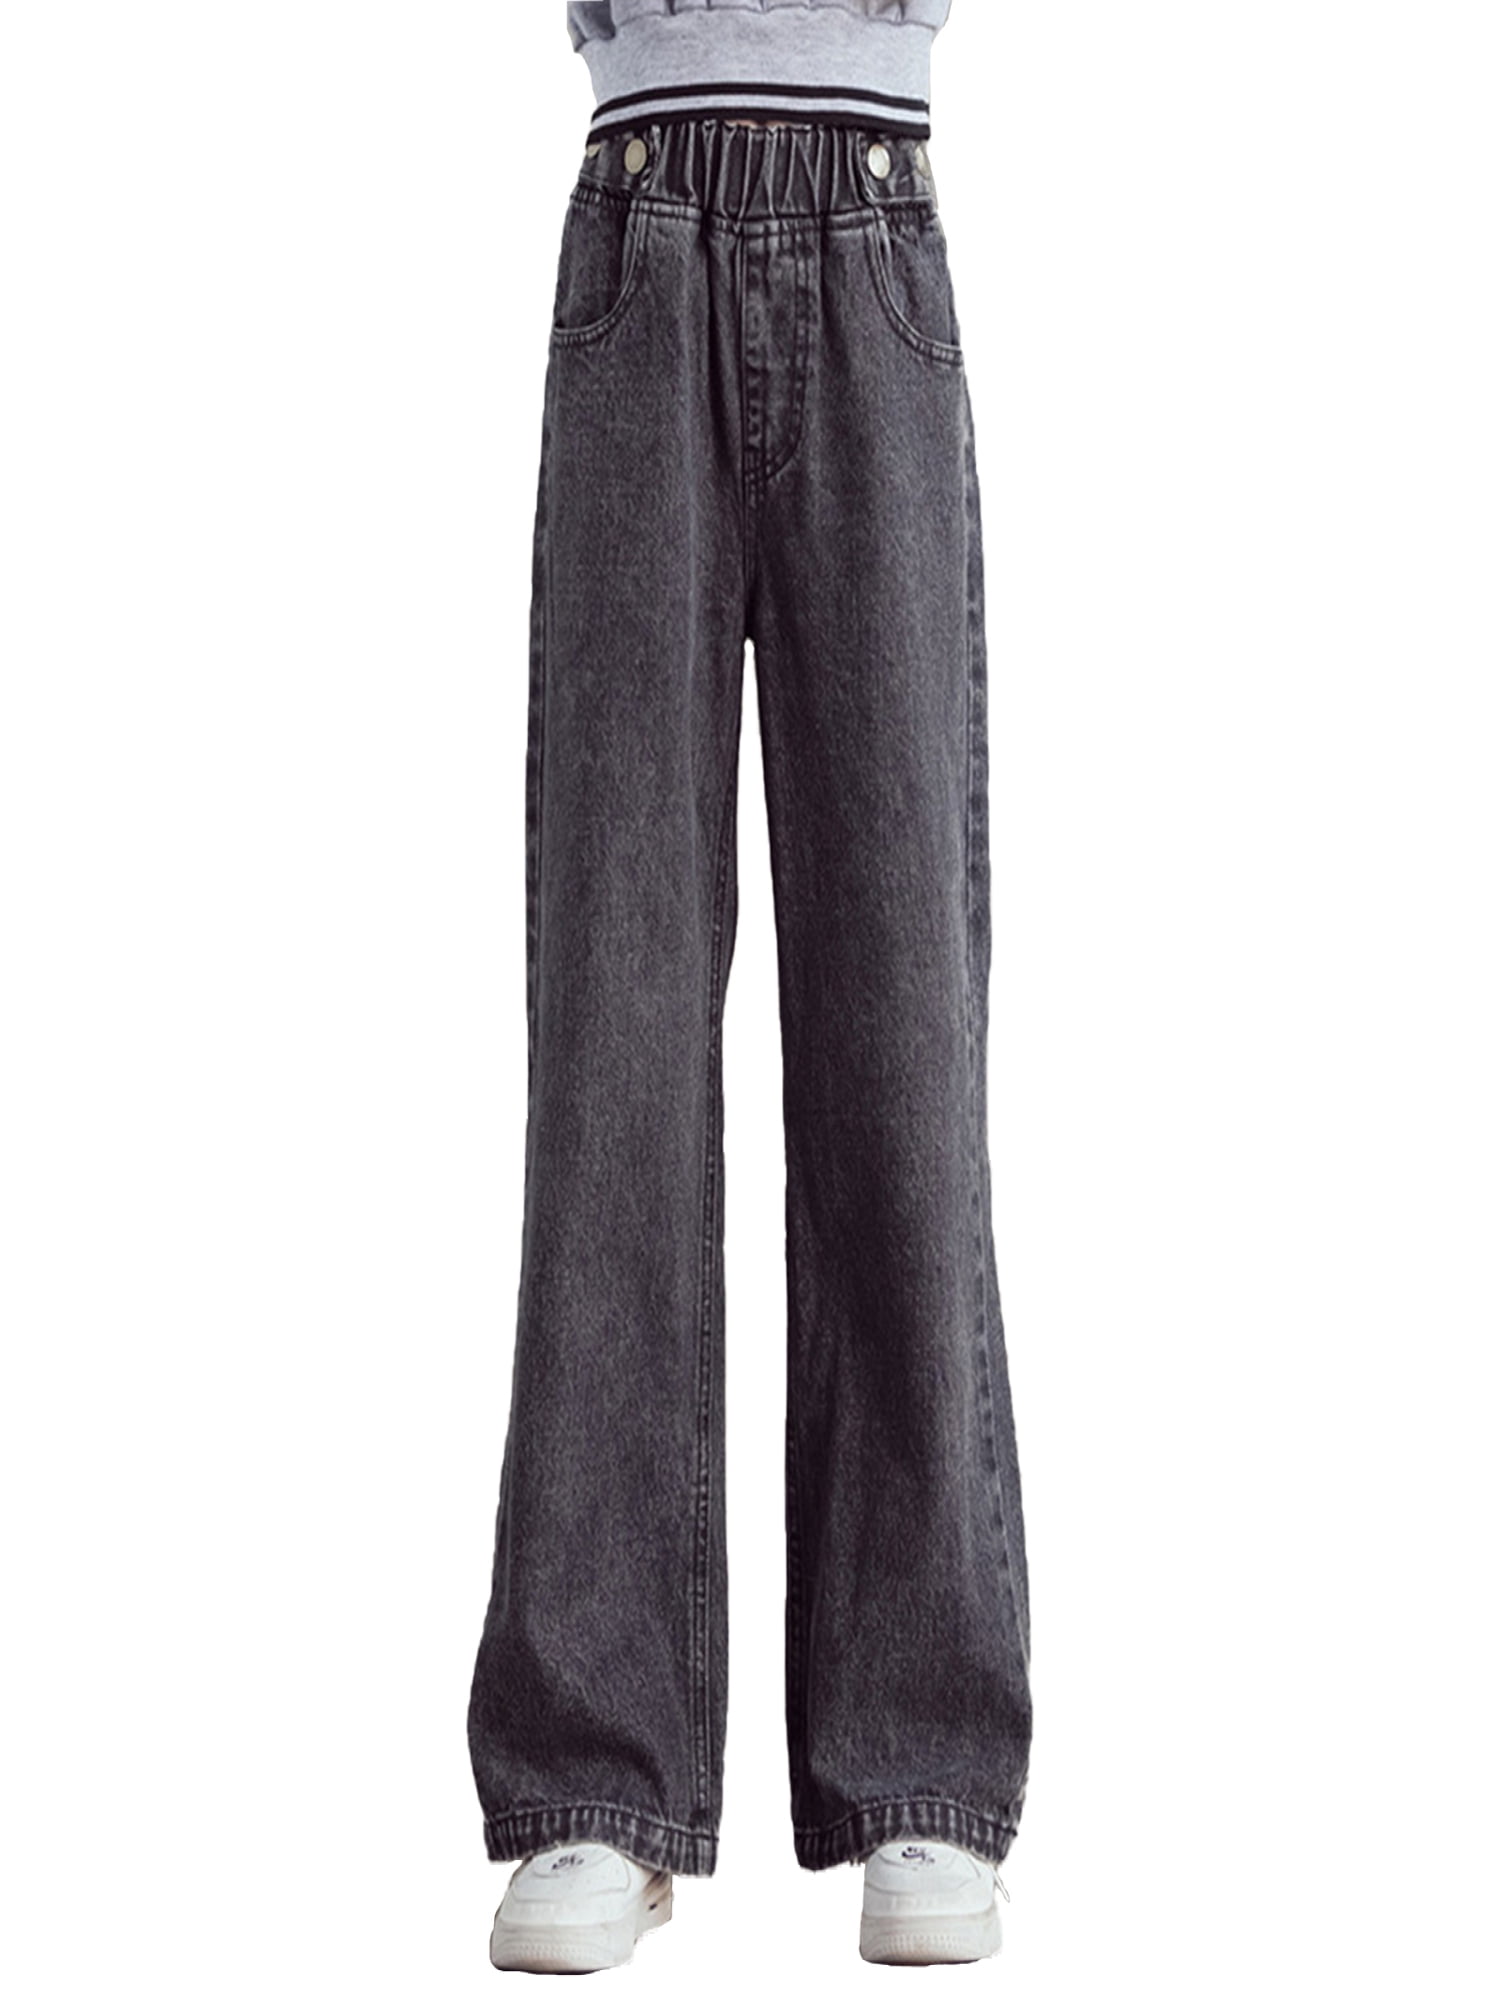 Mrat Full Length Pants Jeans Loose Pants Women Casual Ladies